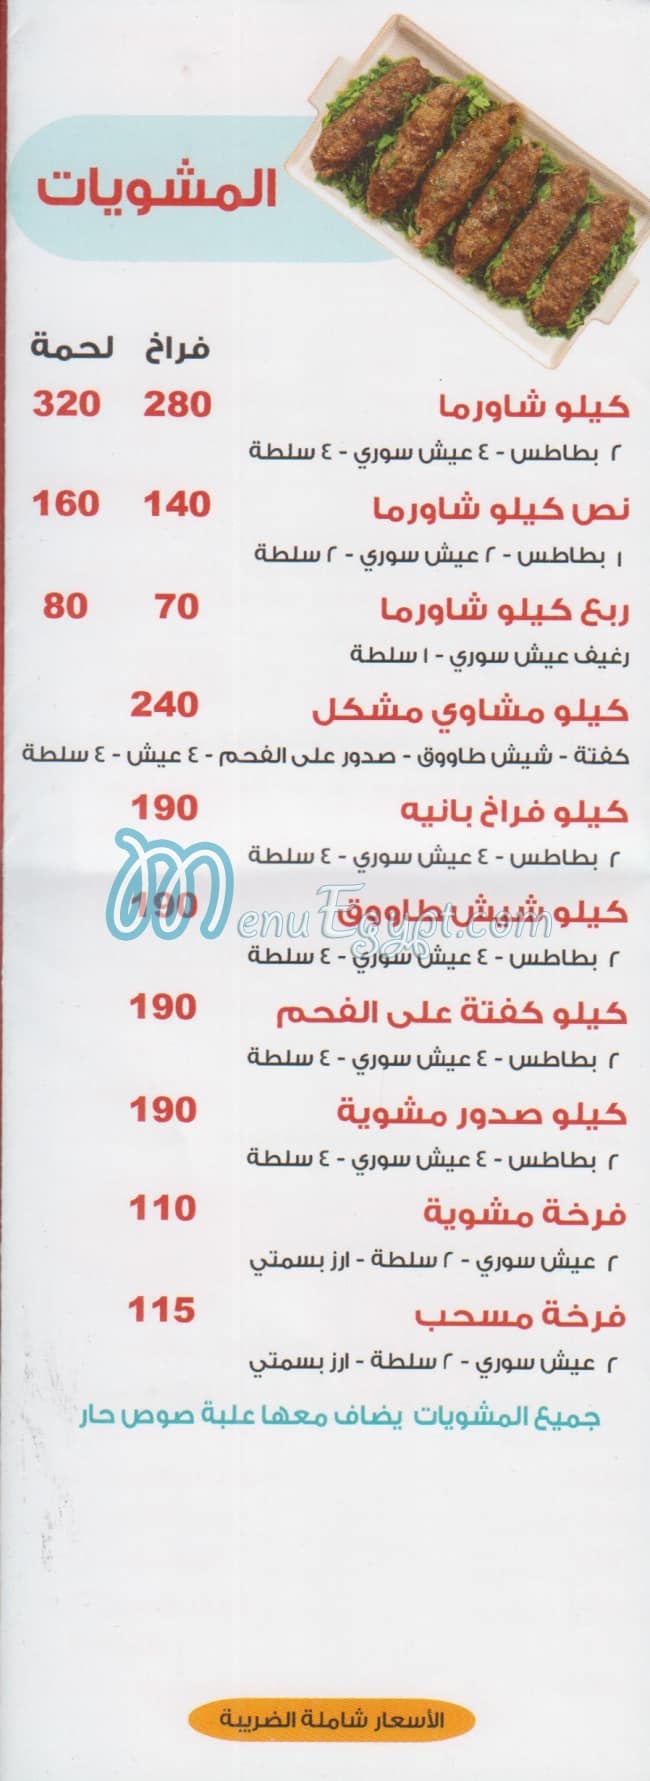 Shawrma Abu MazenTalat Harb Street menu Egypt 1